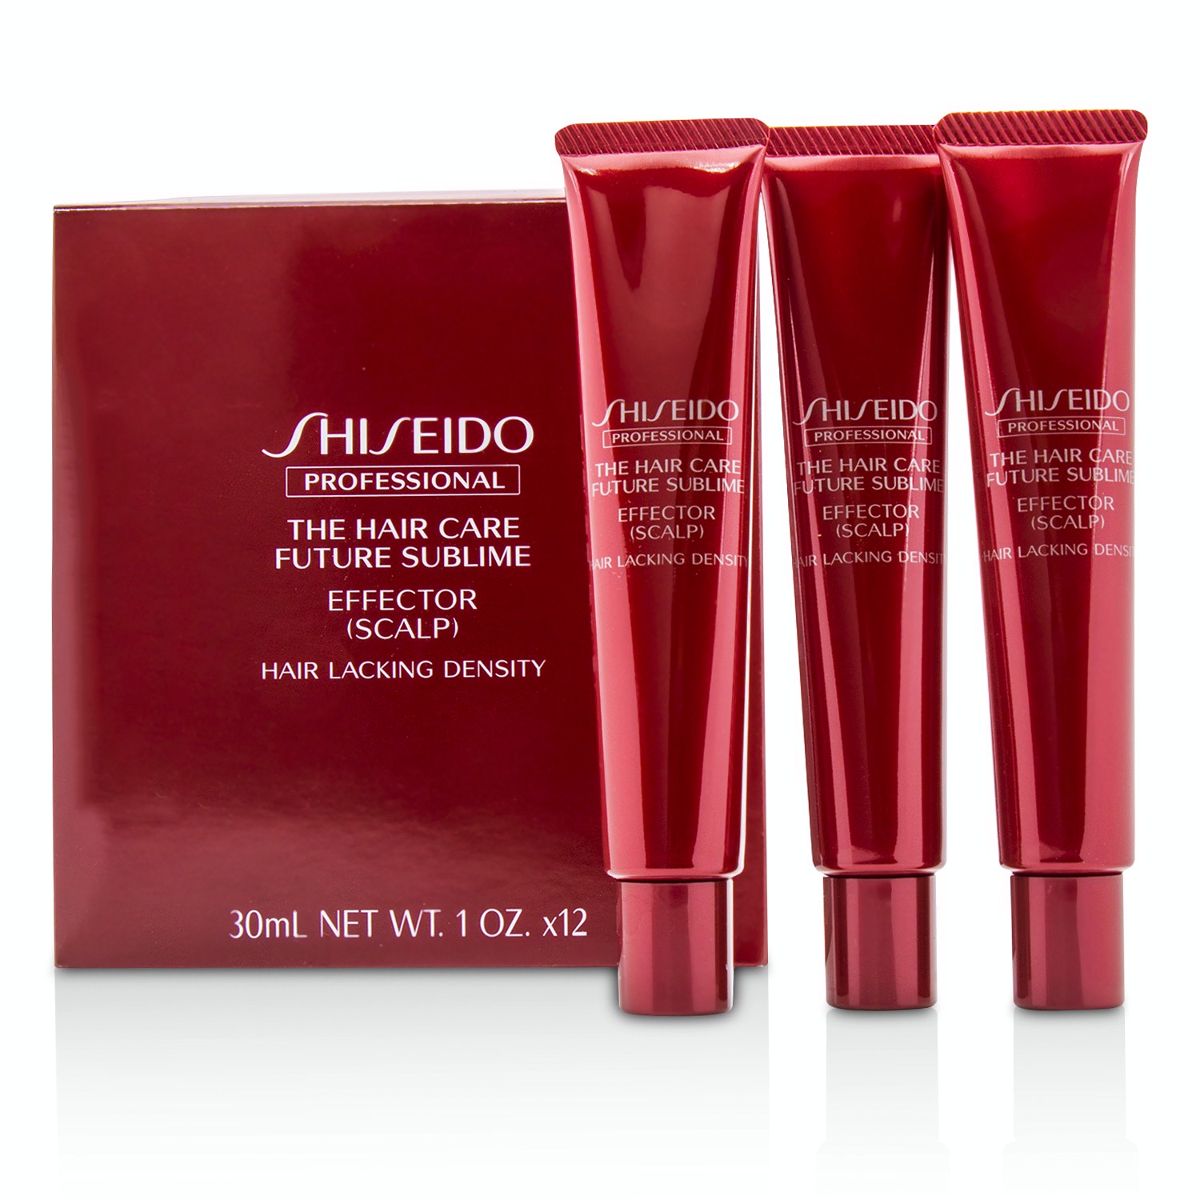 The Hair Care Future Sublime Effector - Scalp (Hair Lacking Density) Shiseido Image